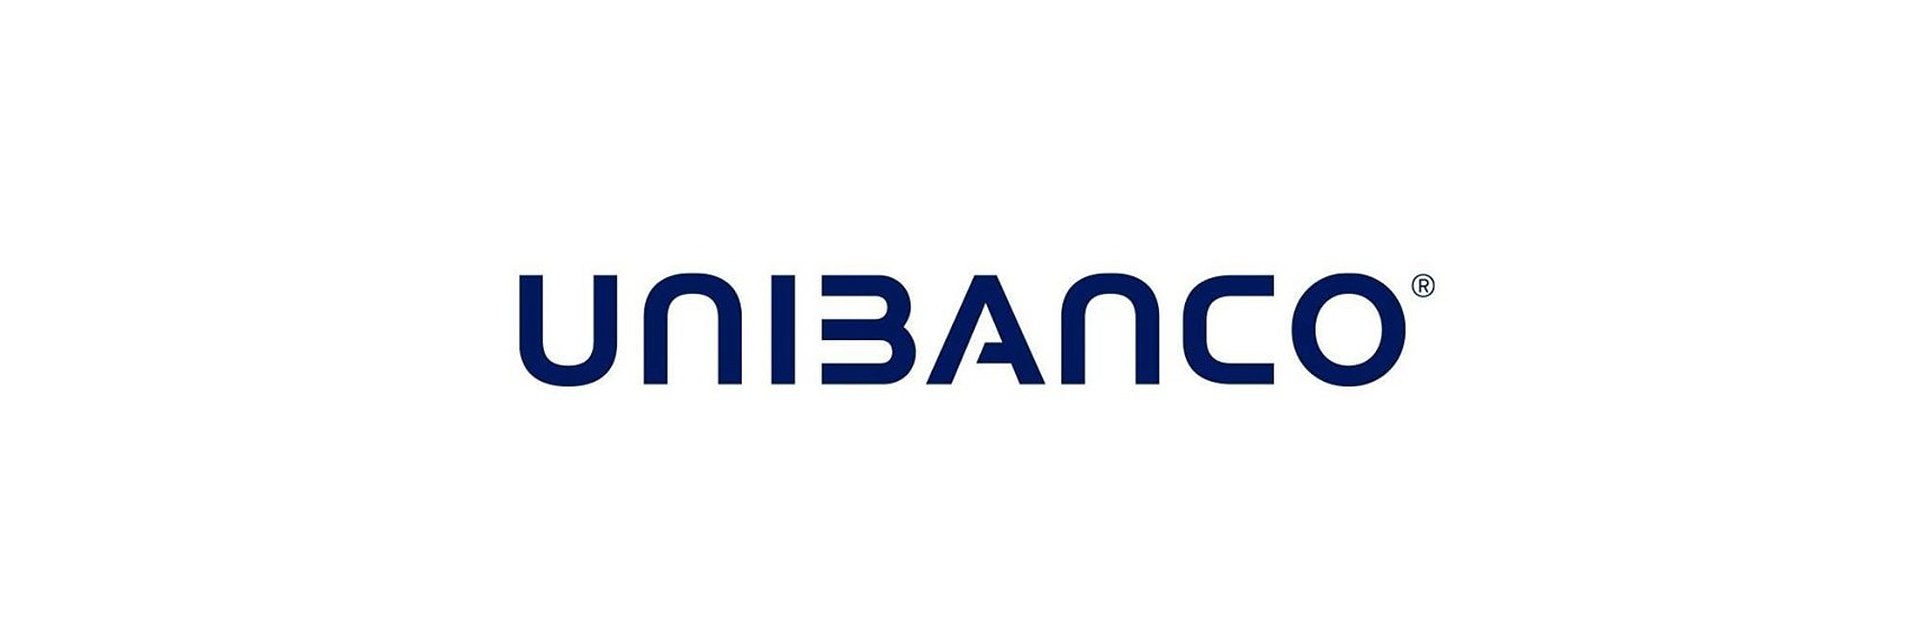 Conheça o crédito consolidado Unibanco